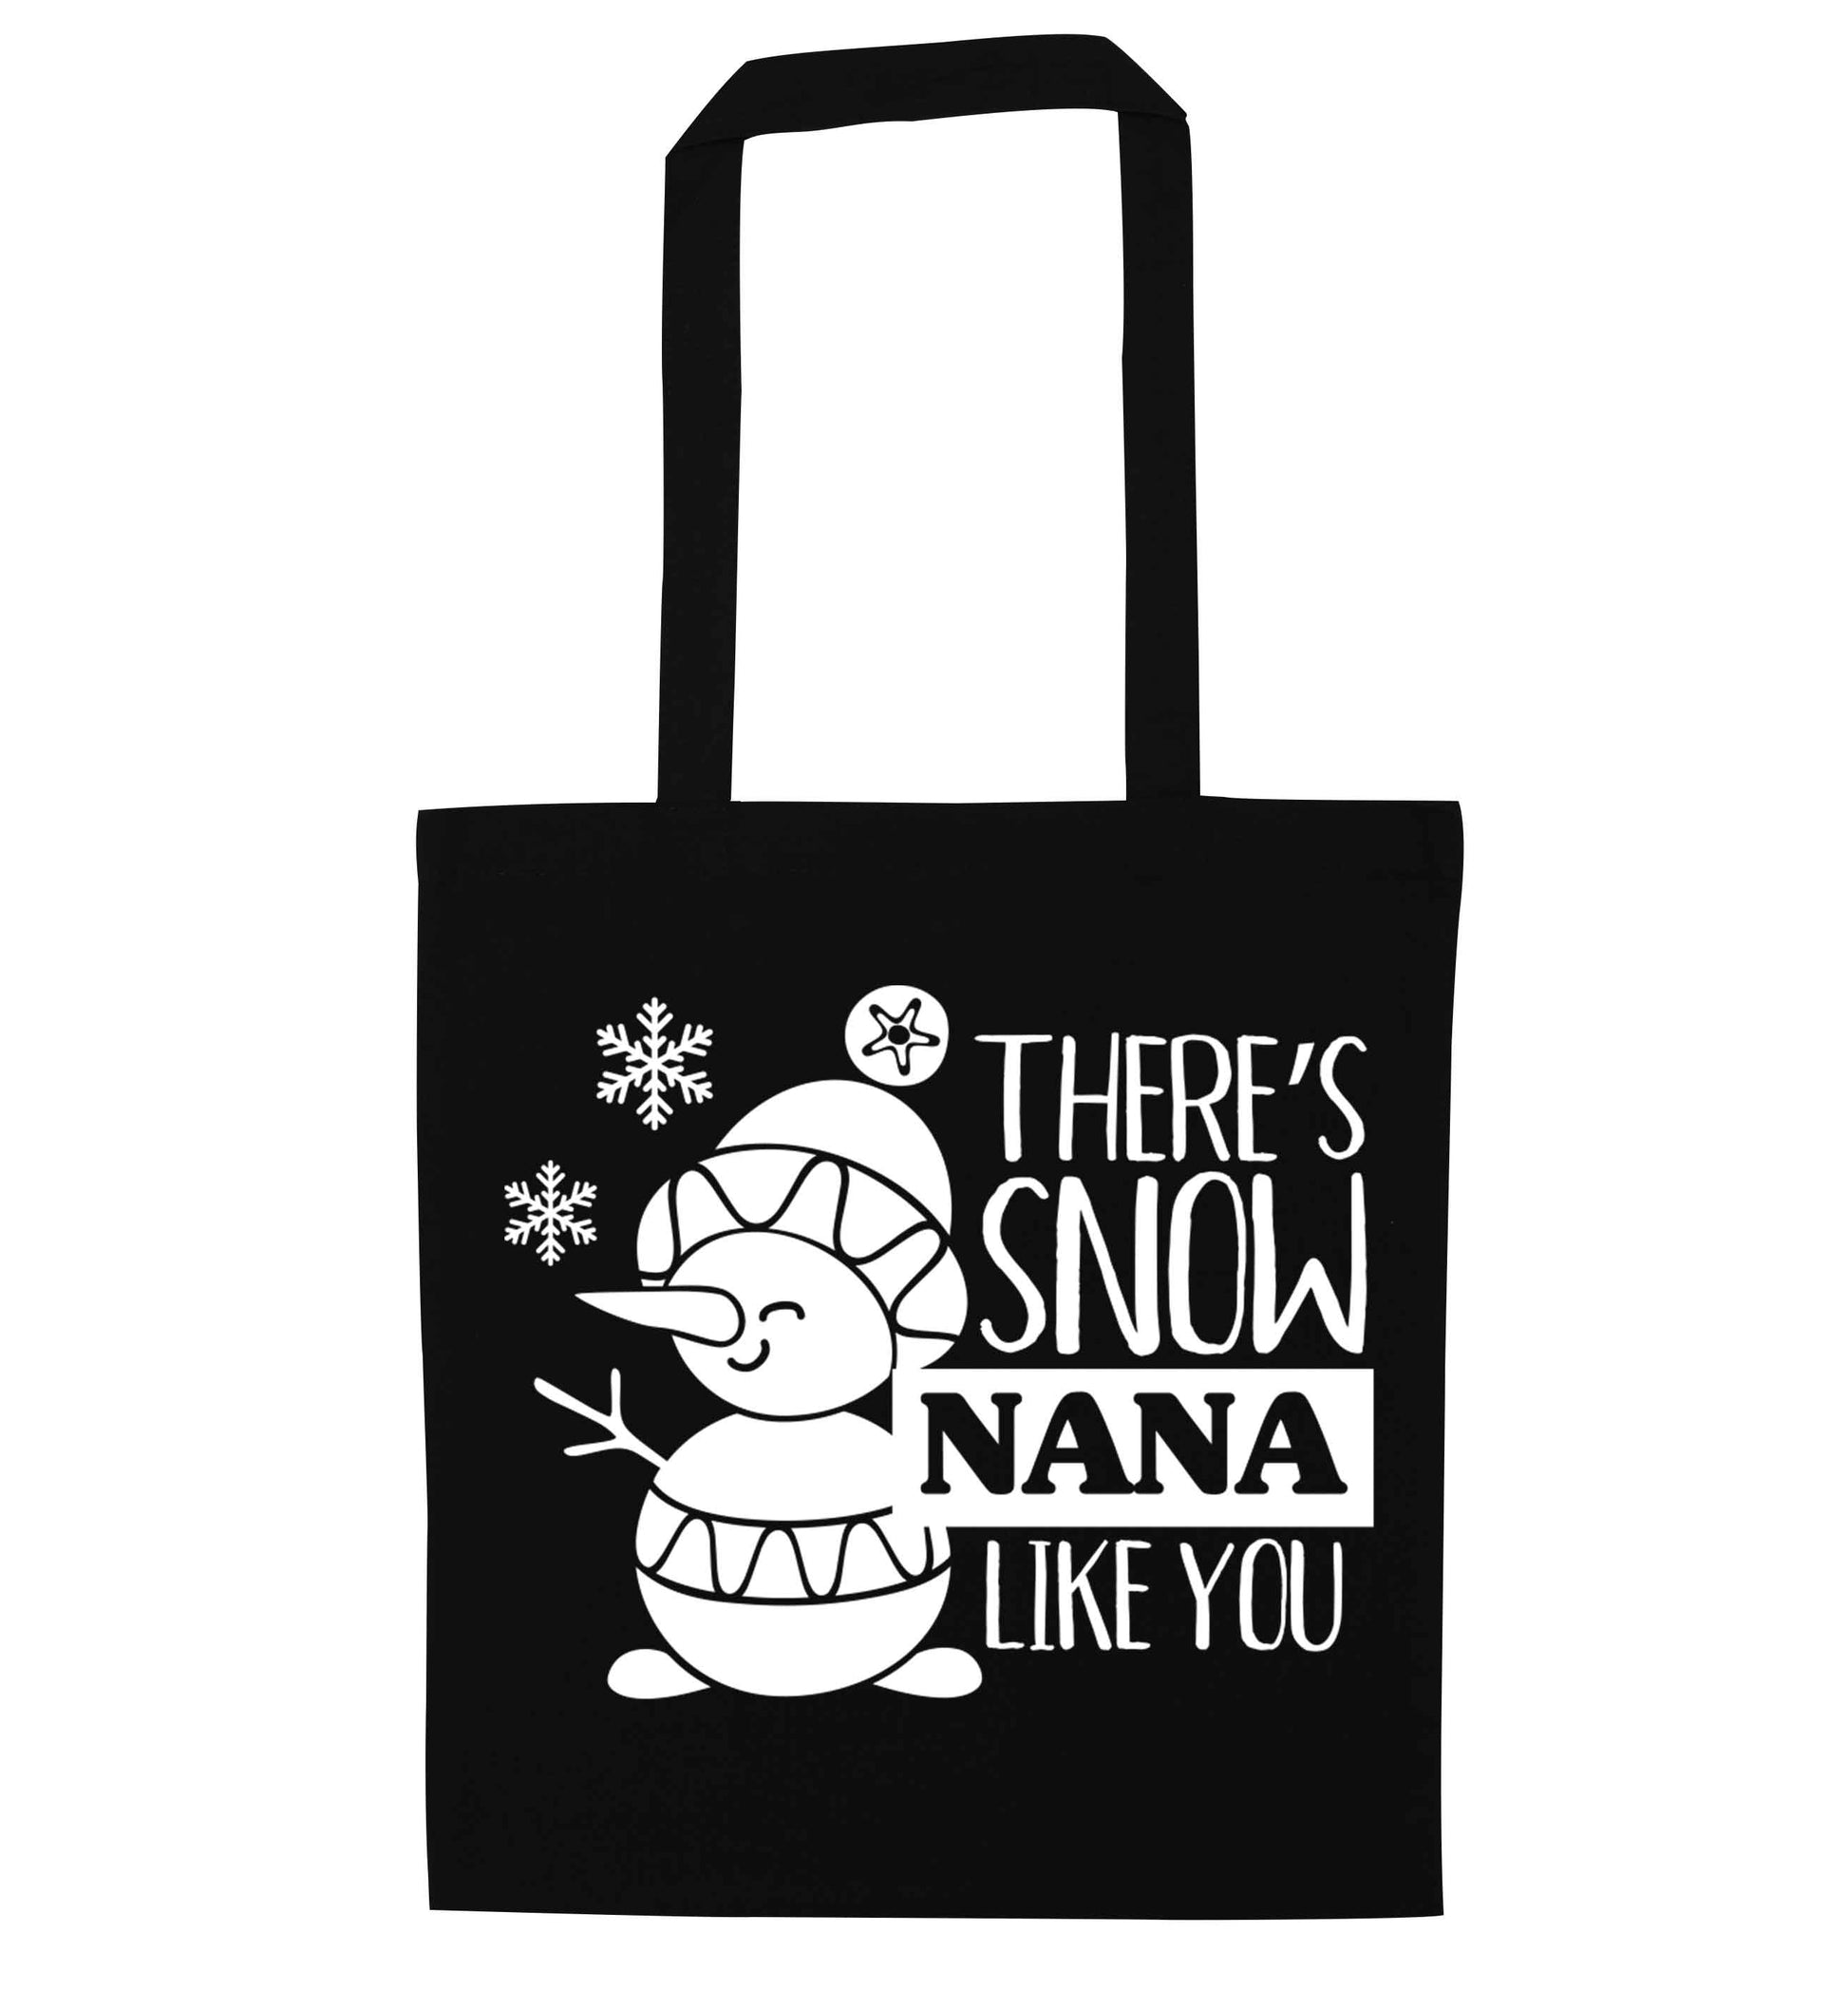 There's snow nana like you black tote bag